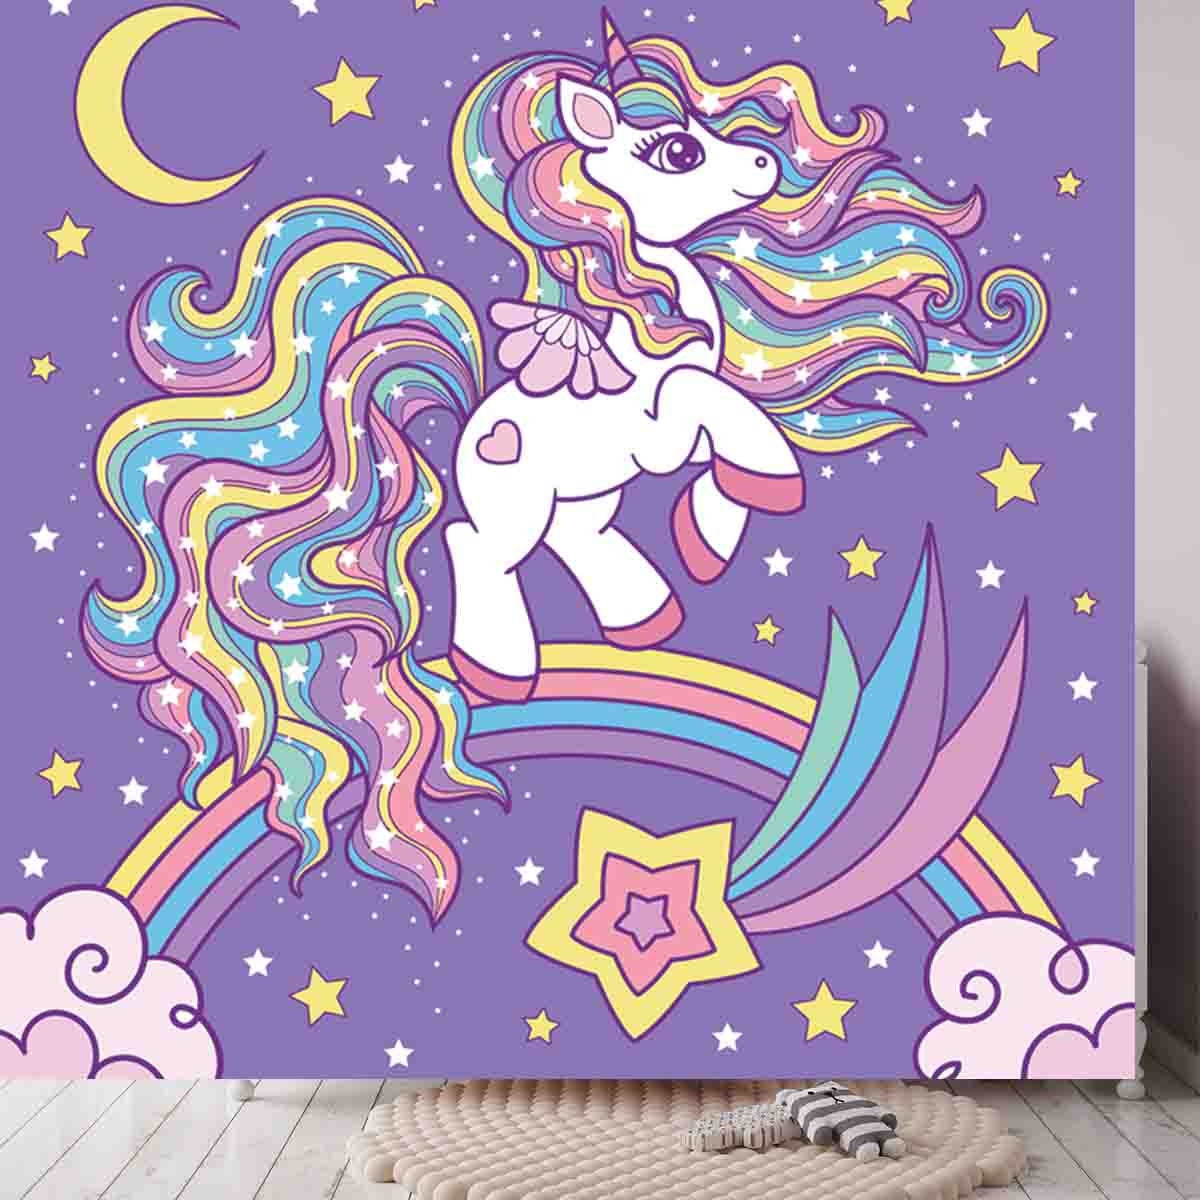 Cute, Cartoon White Unicorn on a Rainbow Among the Stars Wallpaper Little Girl Bedroom Mural